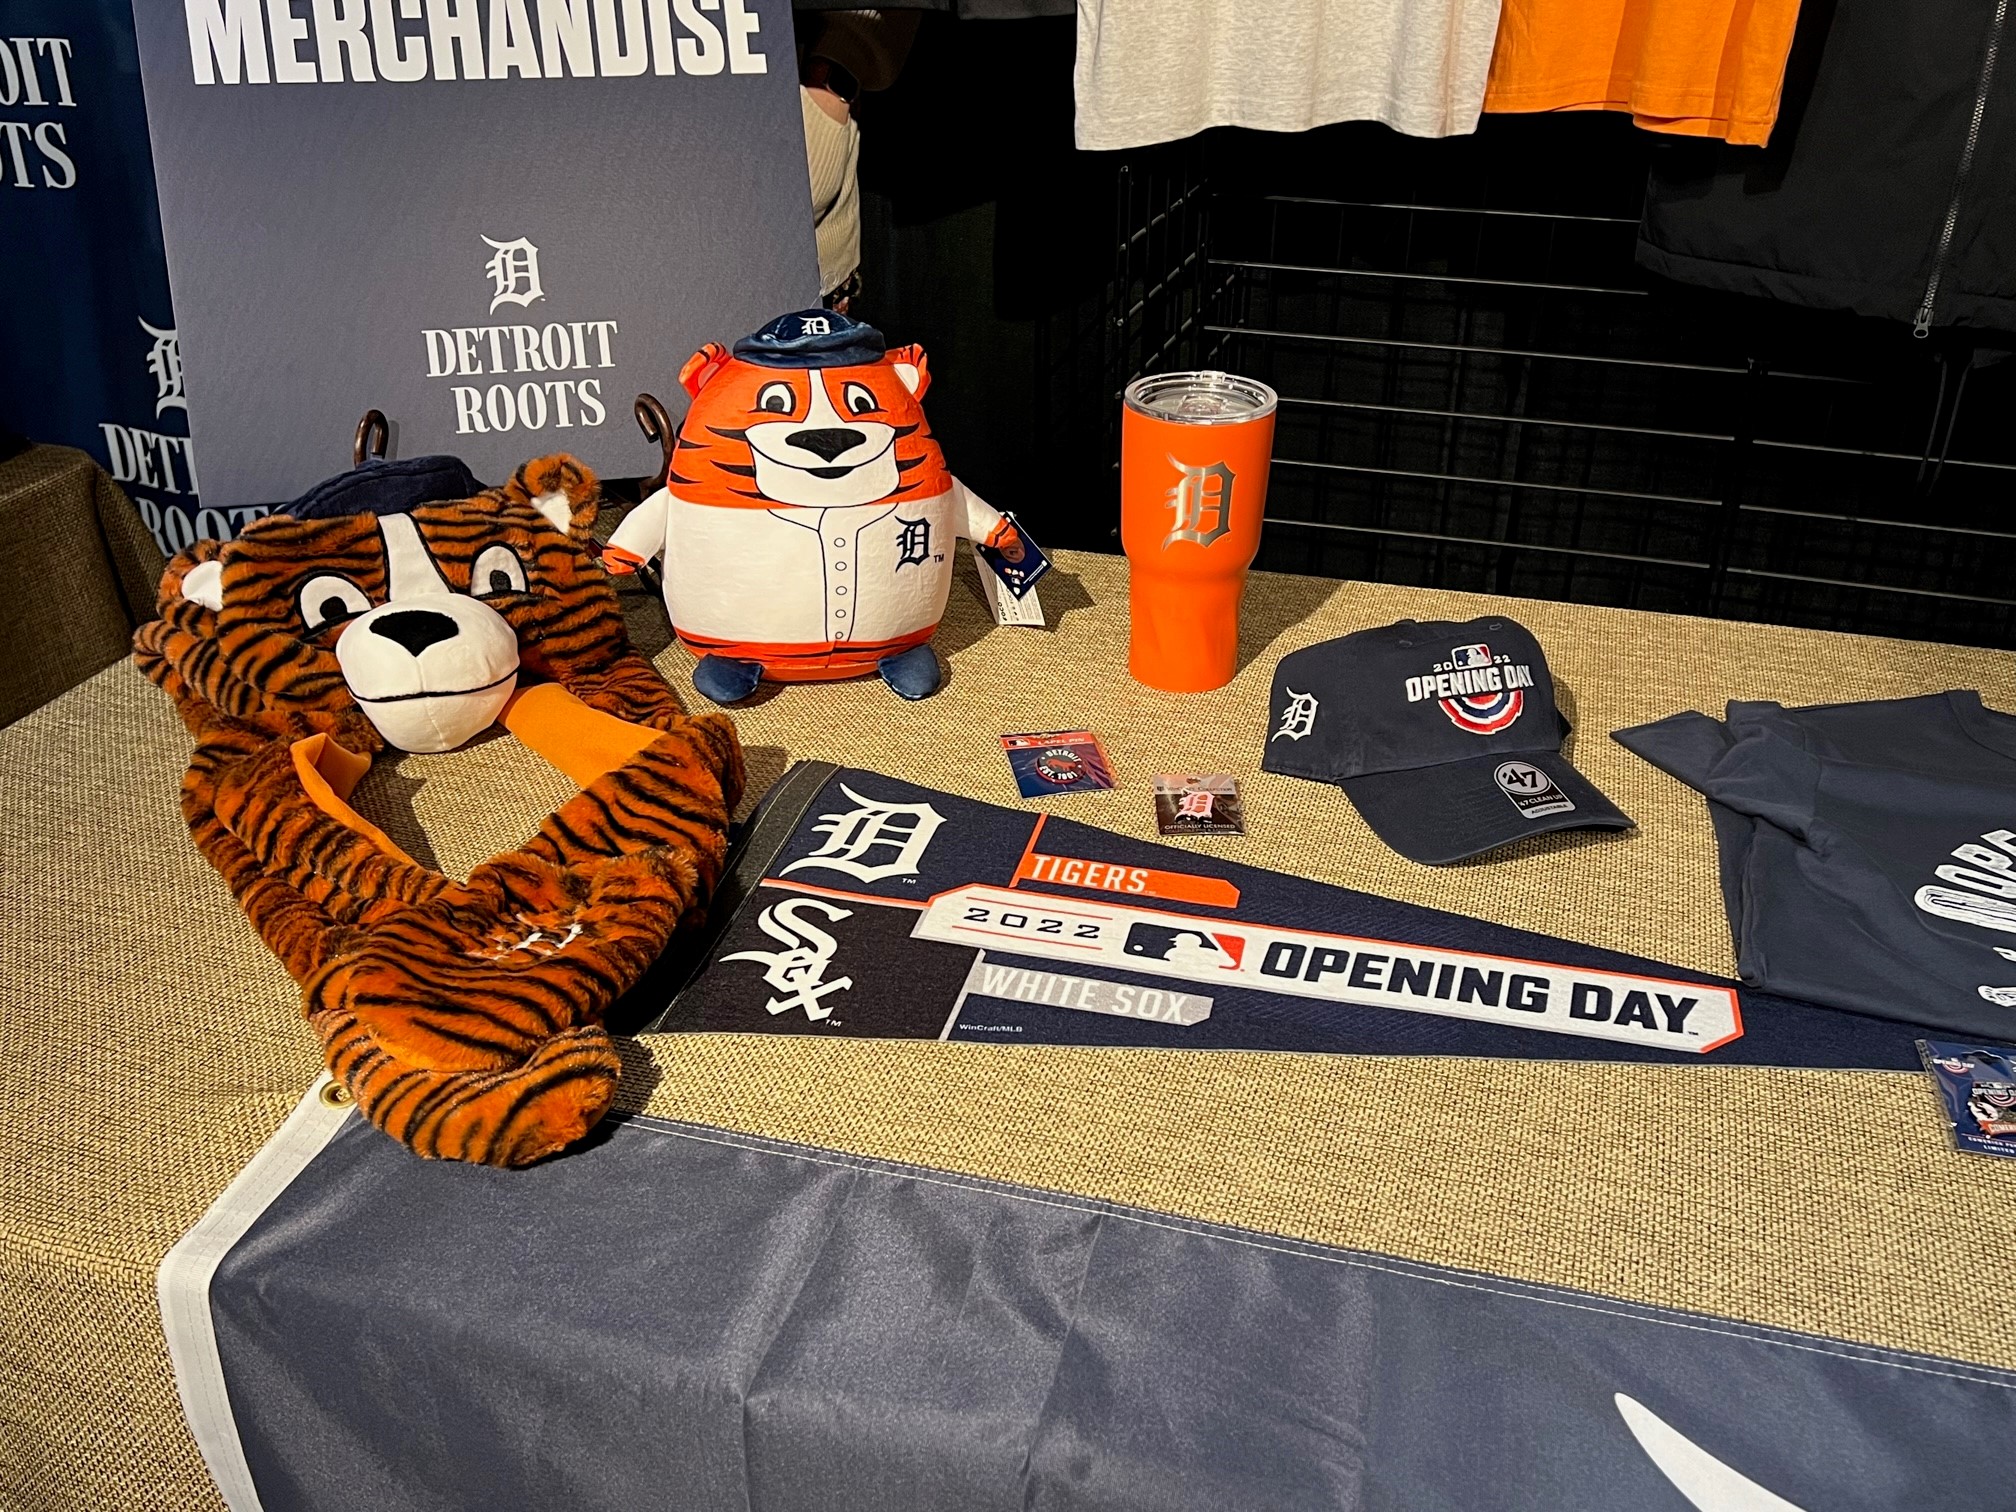 Official Detroit Tigers Merchandise at Comerica Park - Delaware